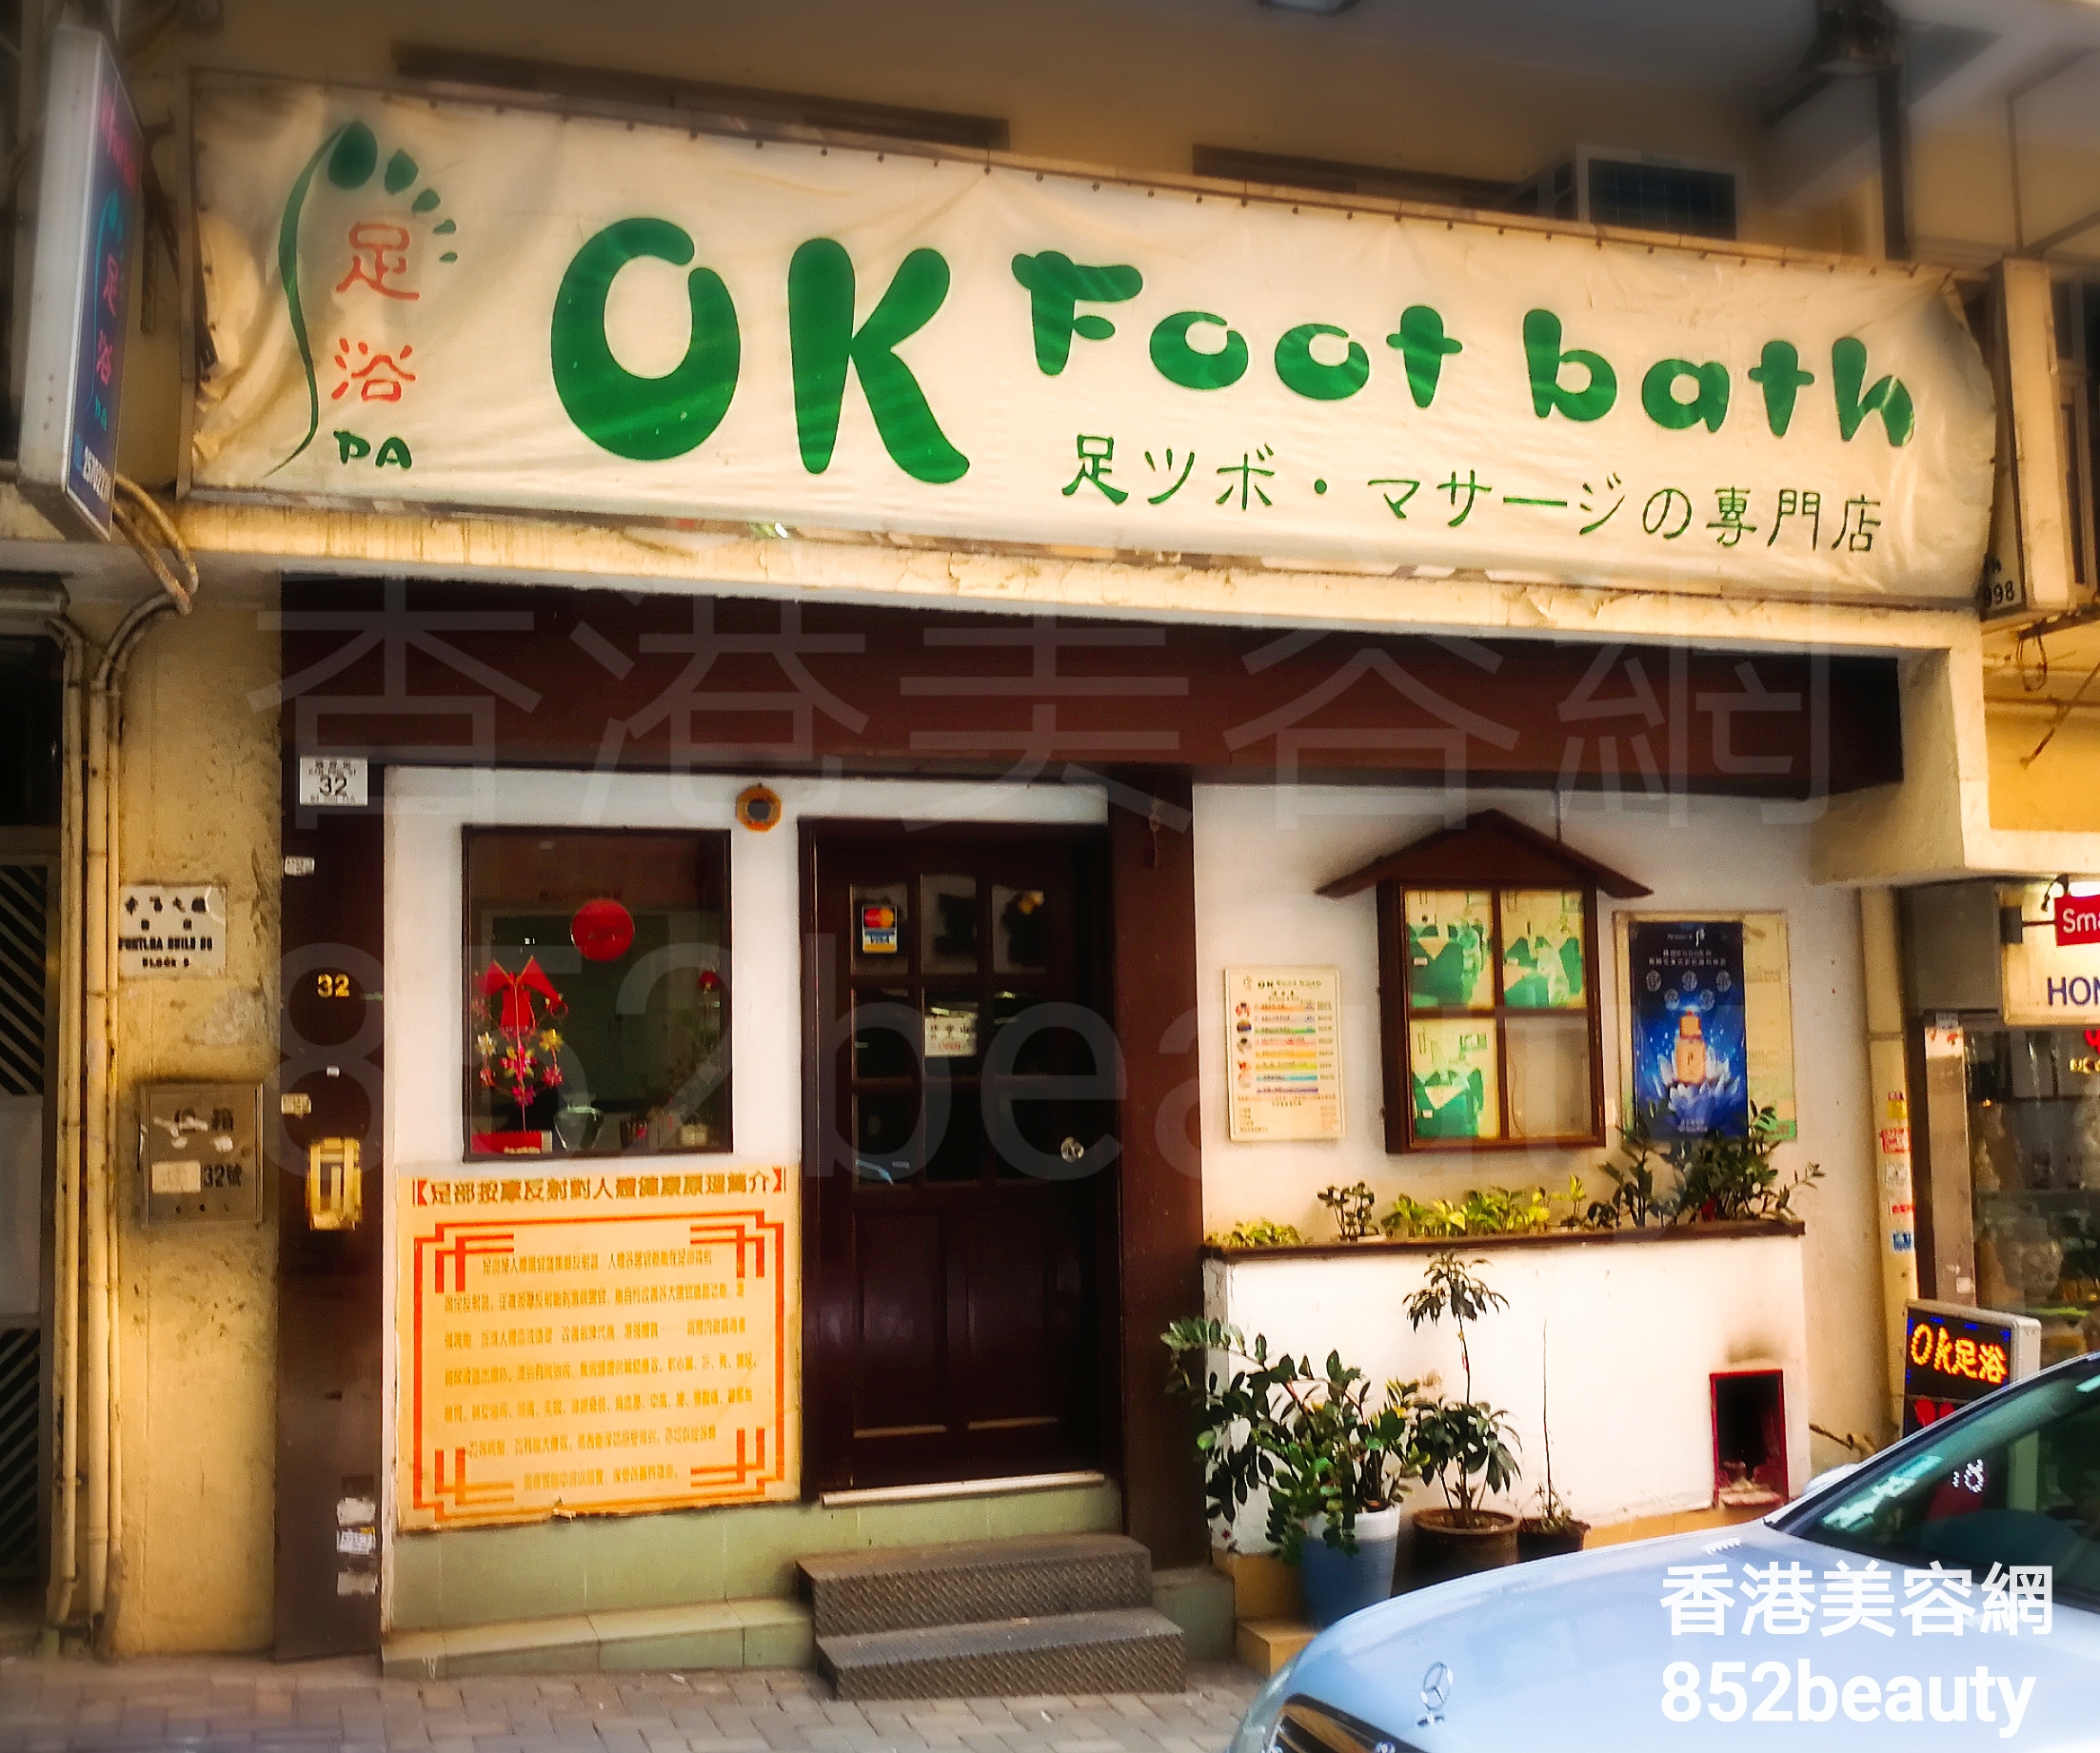 美容院 Beauty Salon: OK Foot bath